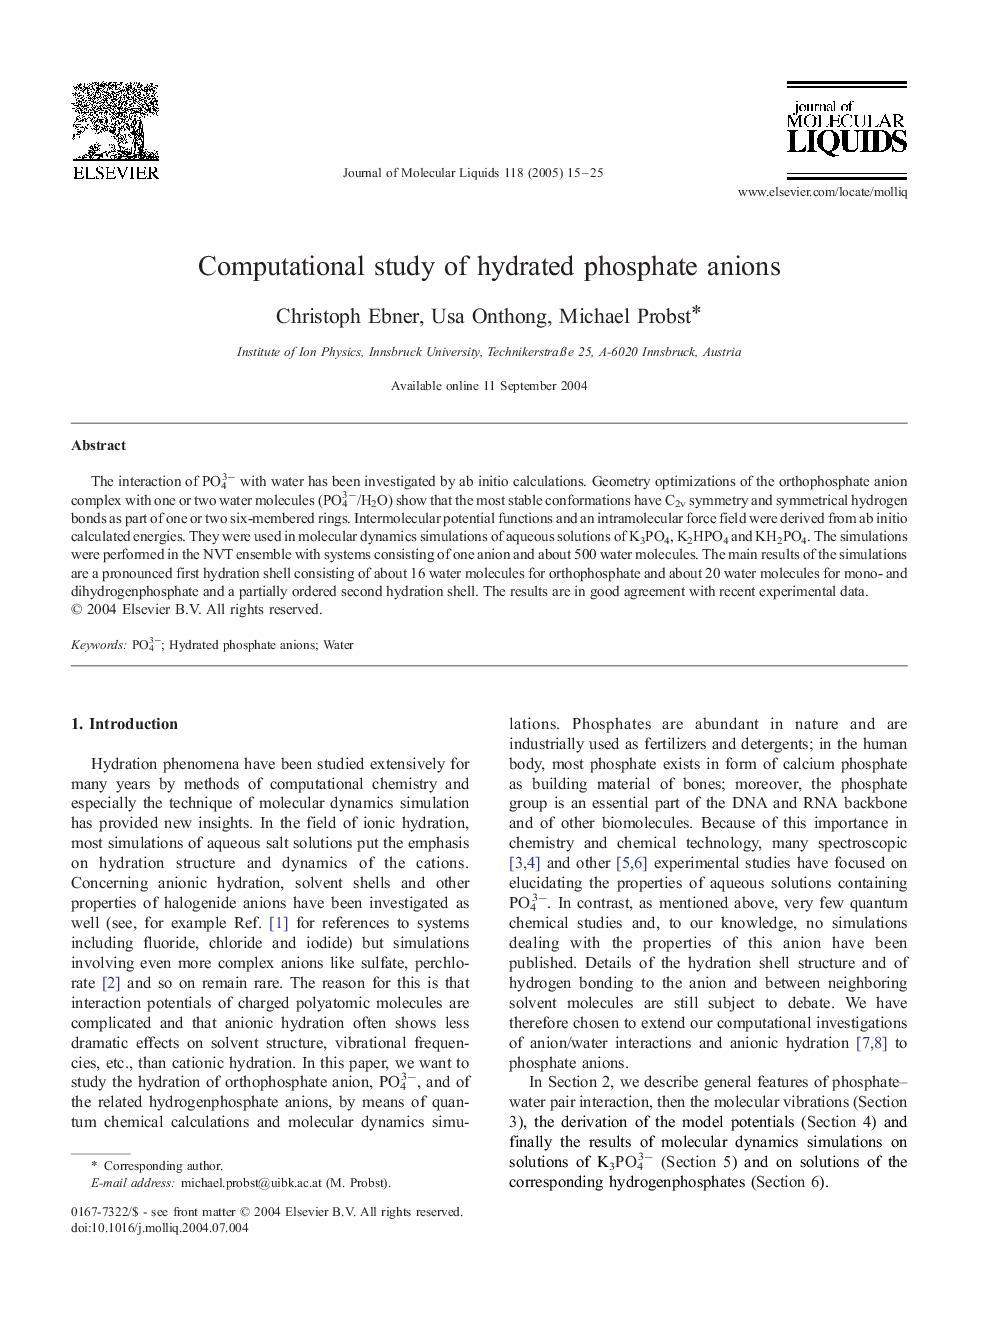 Computational study of hydrated phosphate anions